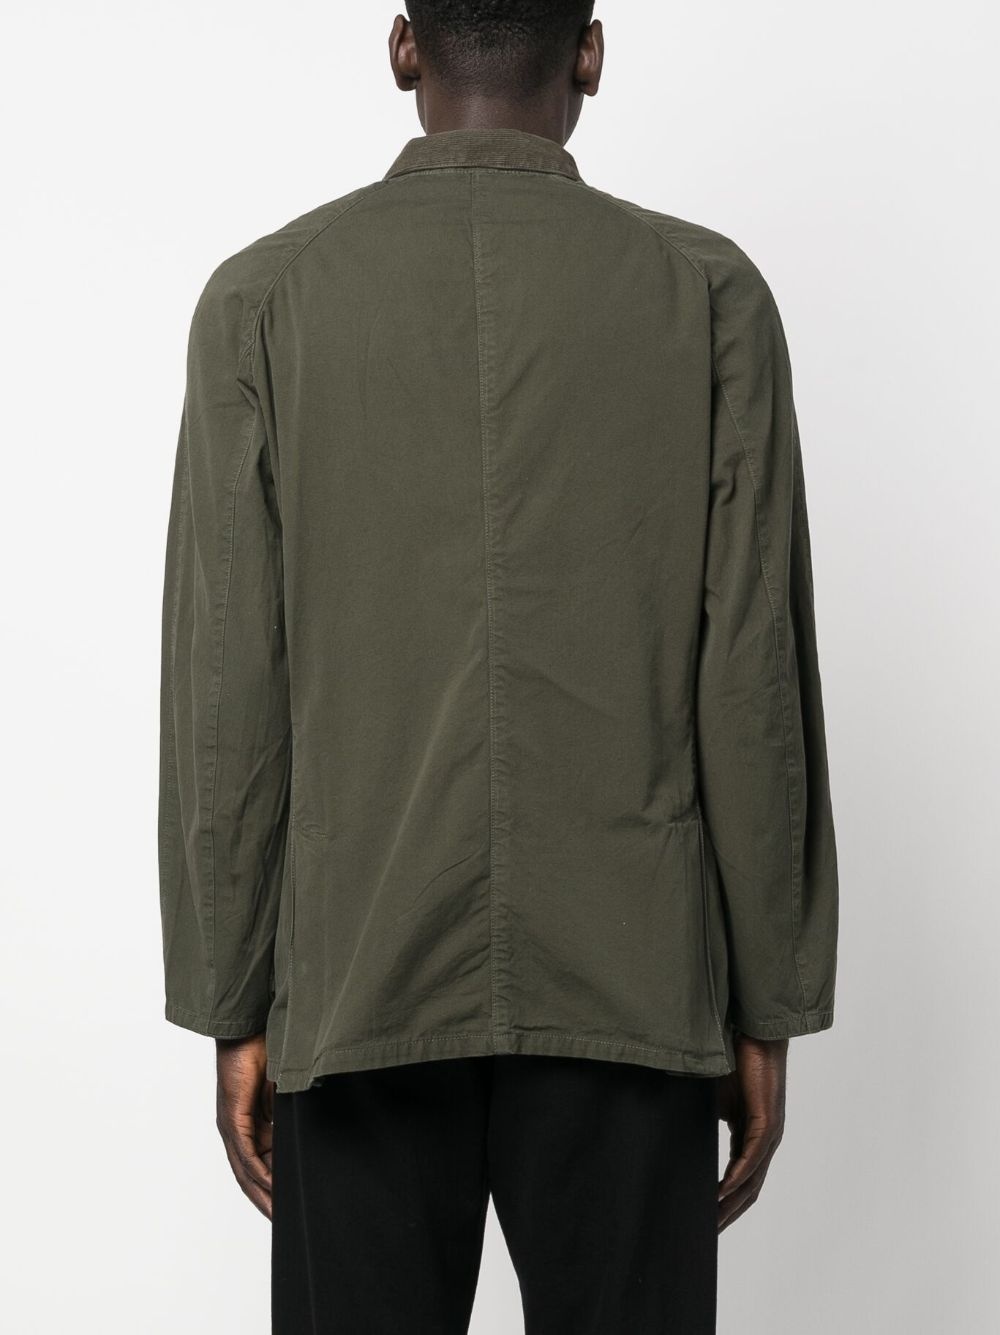 spread-collar shirt jacket - 4